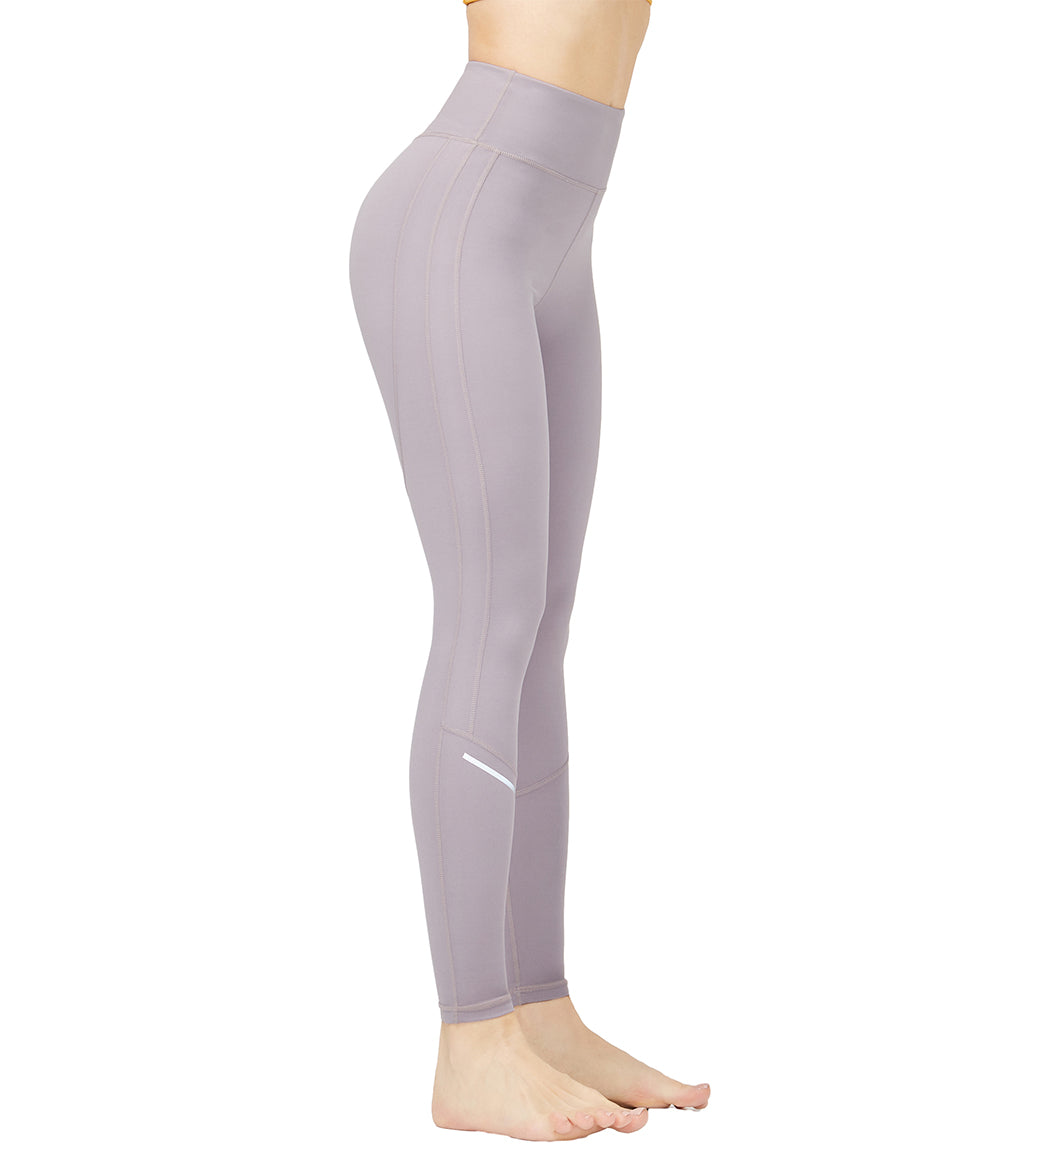 LOVESOFT Women's Leggings High Waist Tummy Control Sports Yoga Pants